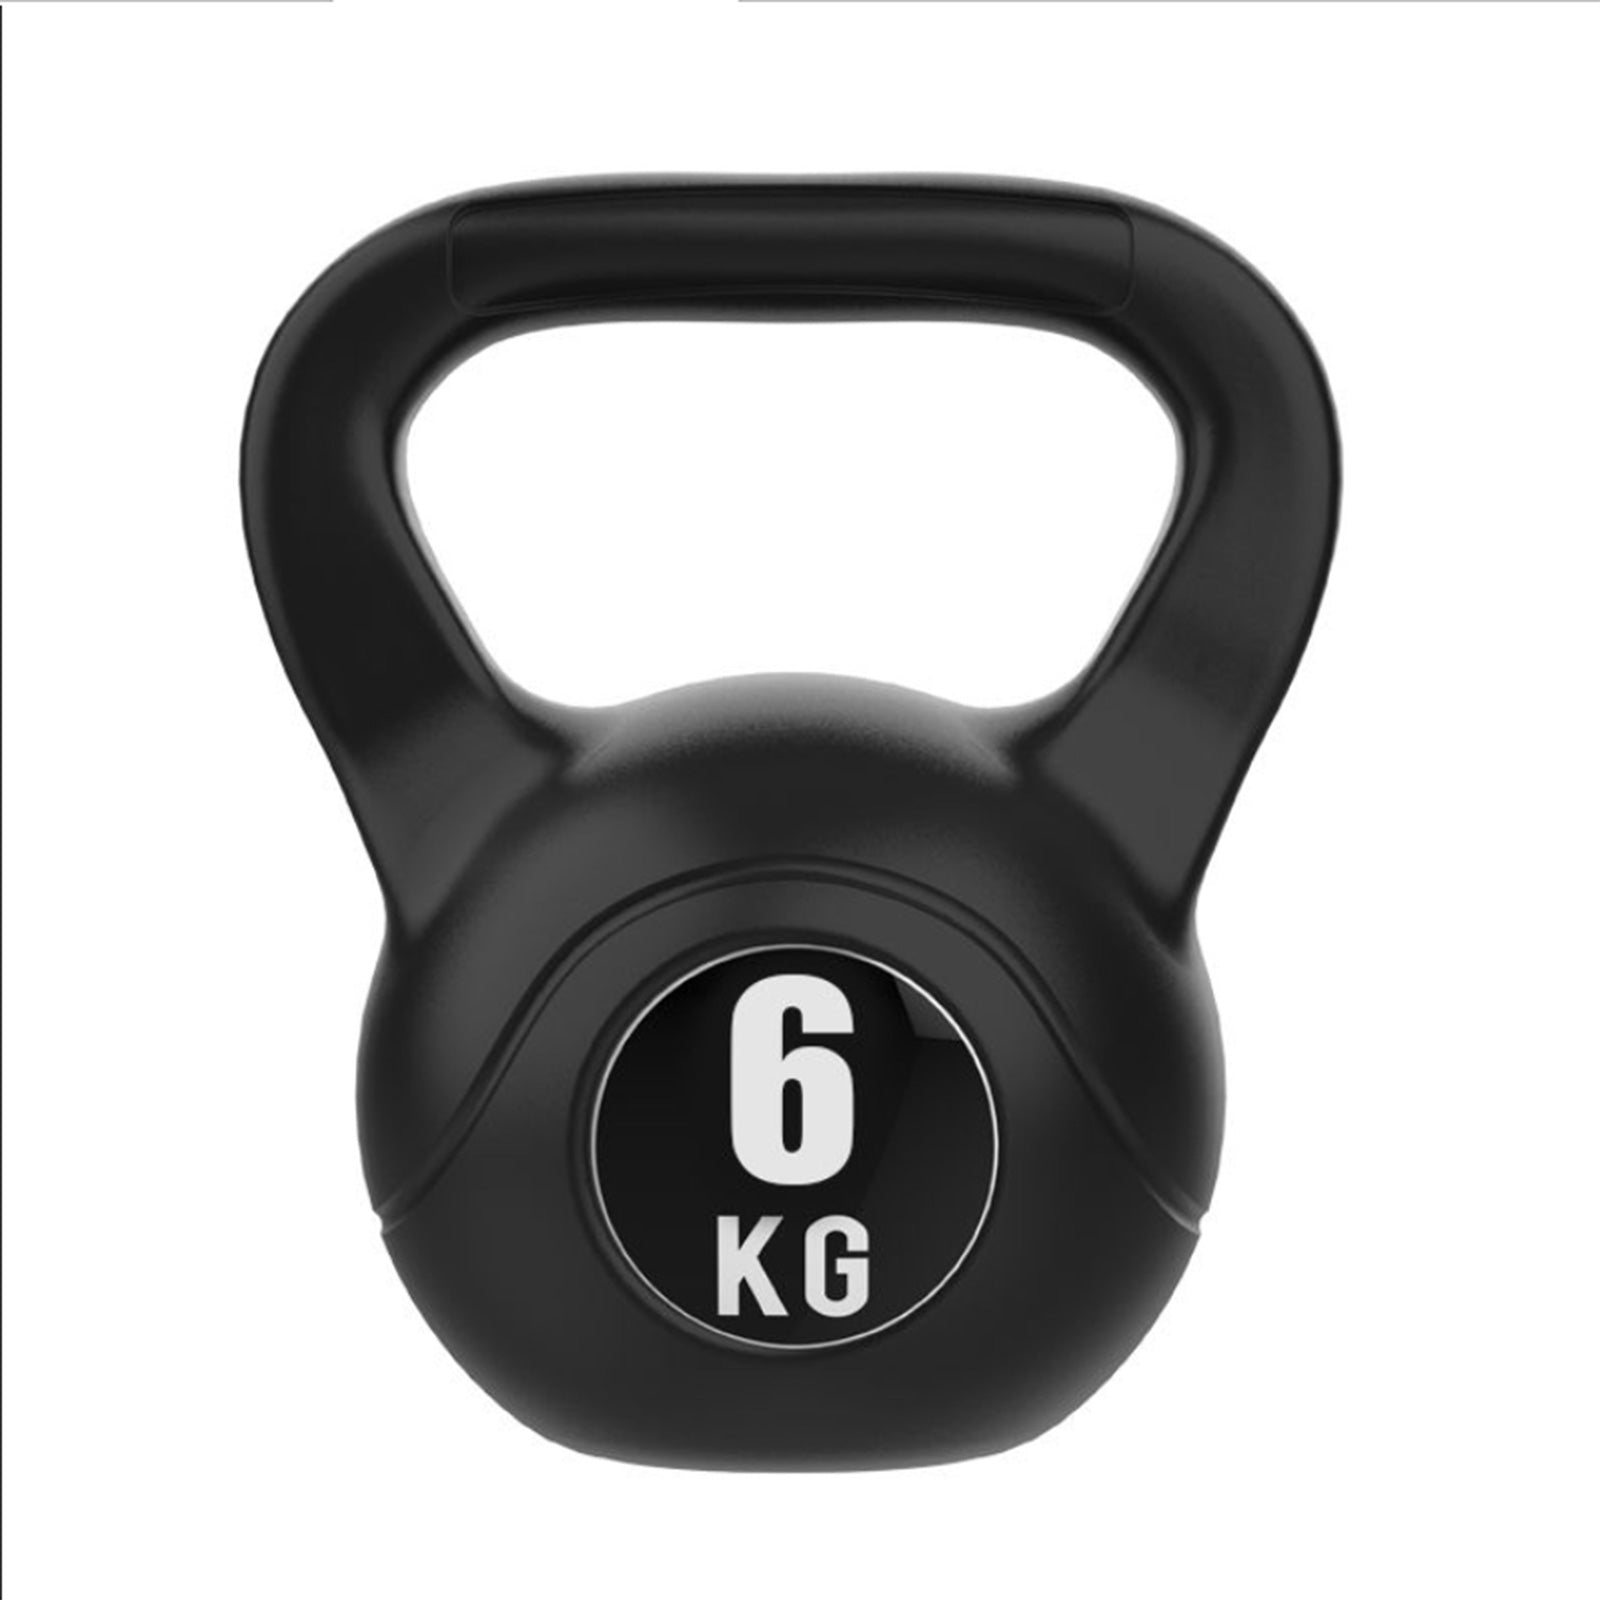 JMQ 4-12KG Kettlebell Kettle Bell Weight Exercise Home Gym Workout - 6KG